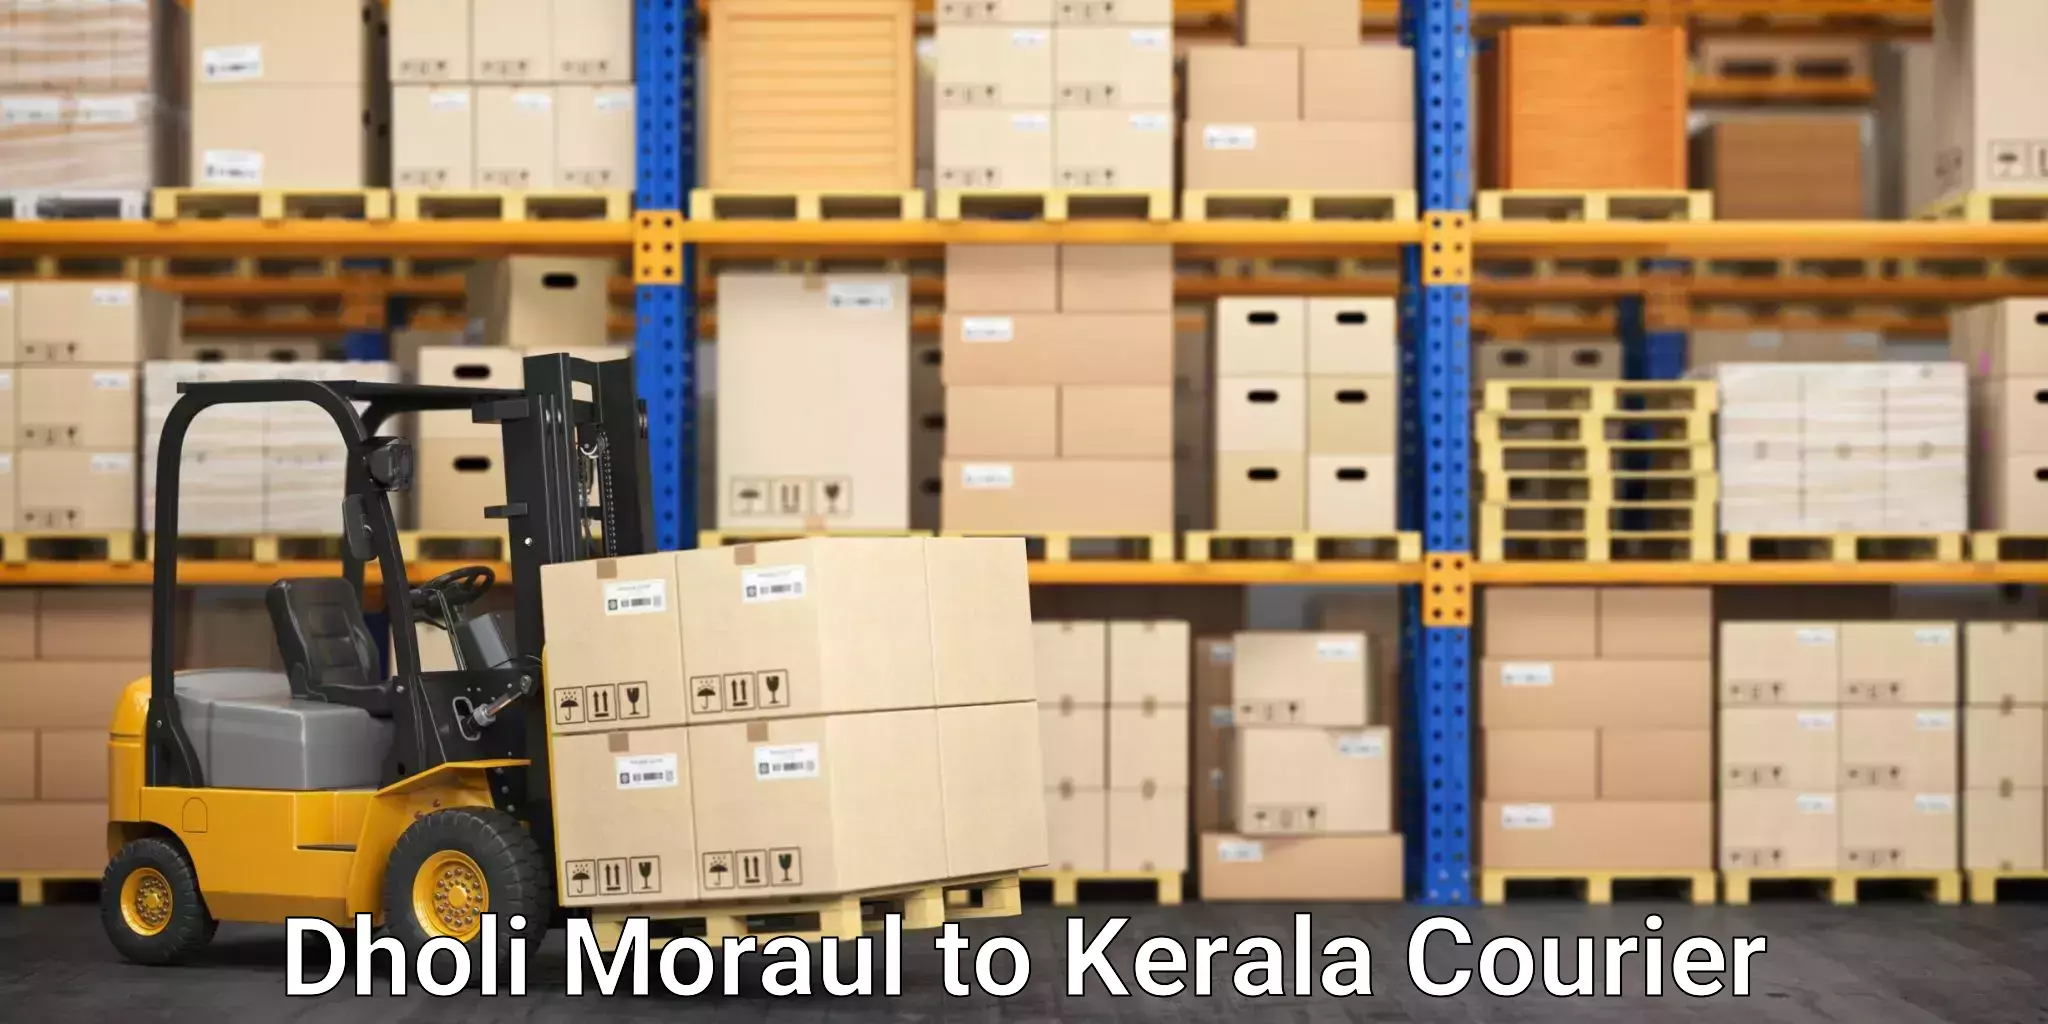 Quality moving company Dholi Moraul to Kerala